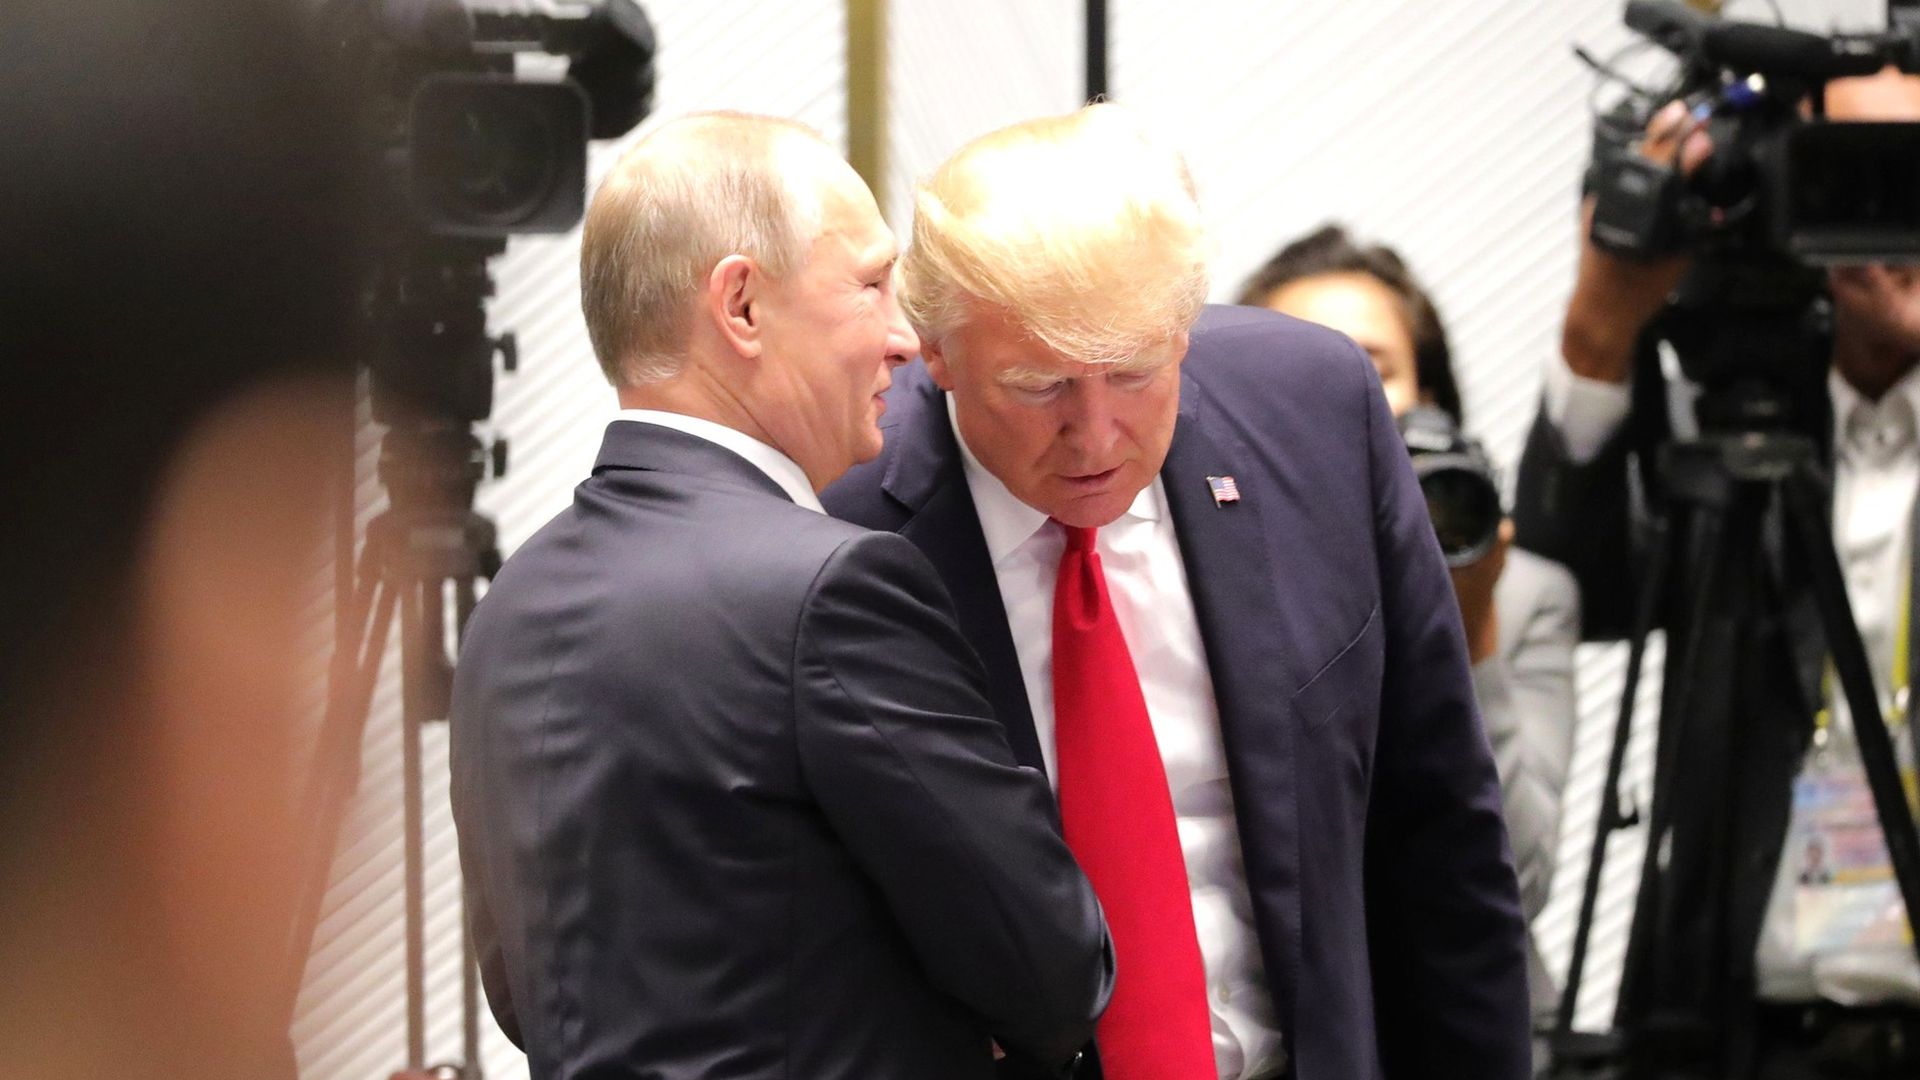 Vladimir Putin whispering into the ear of Donald Trump